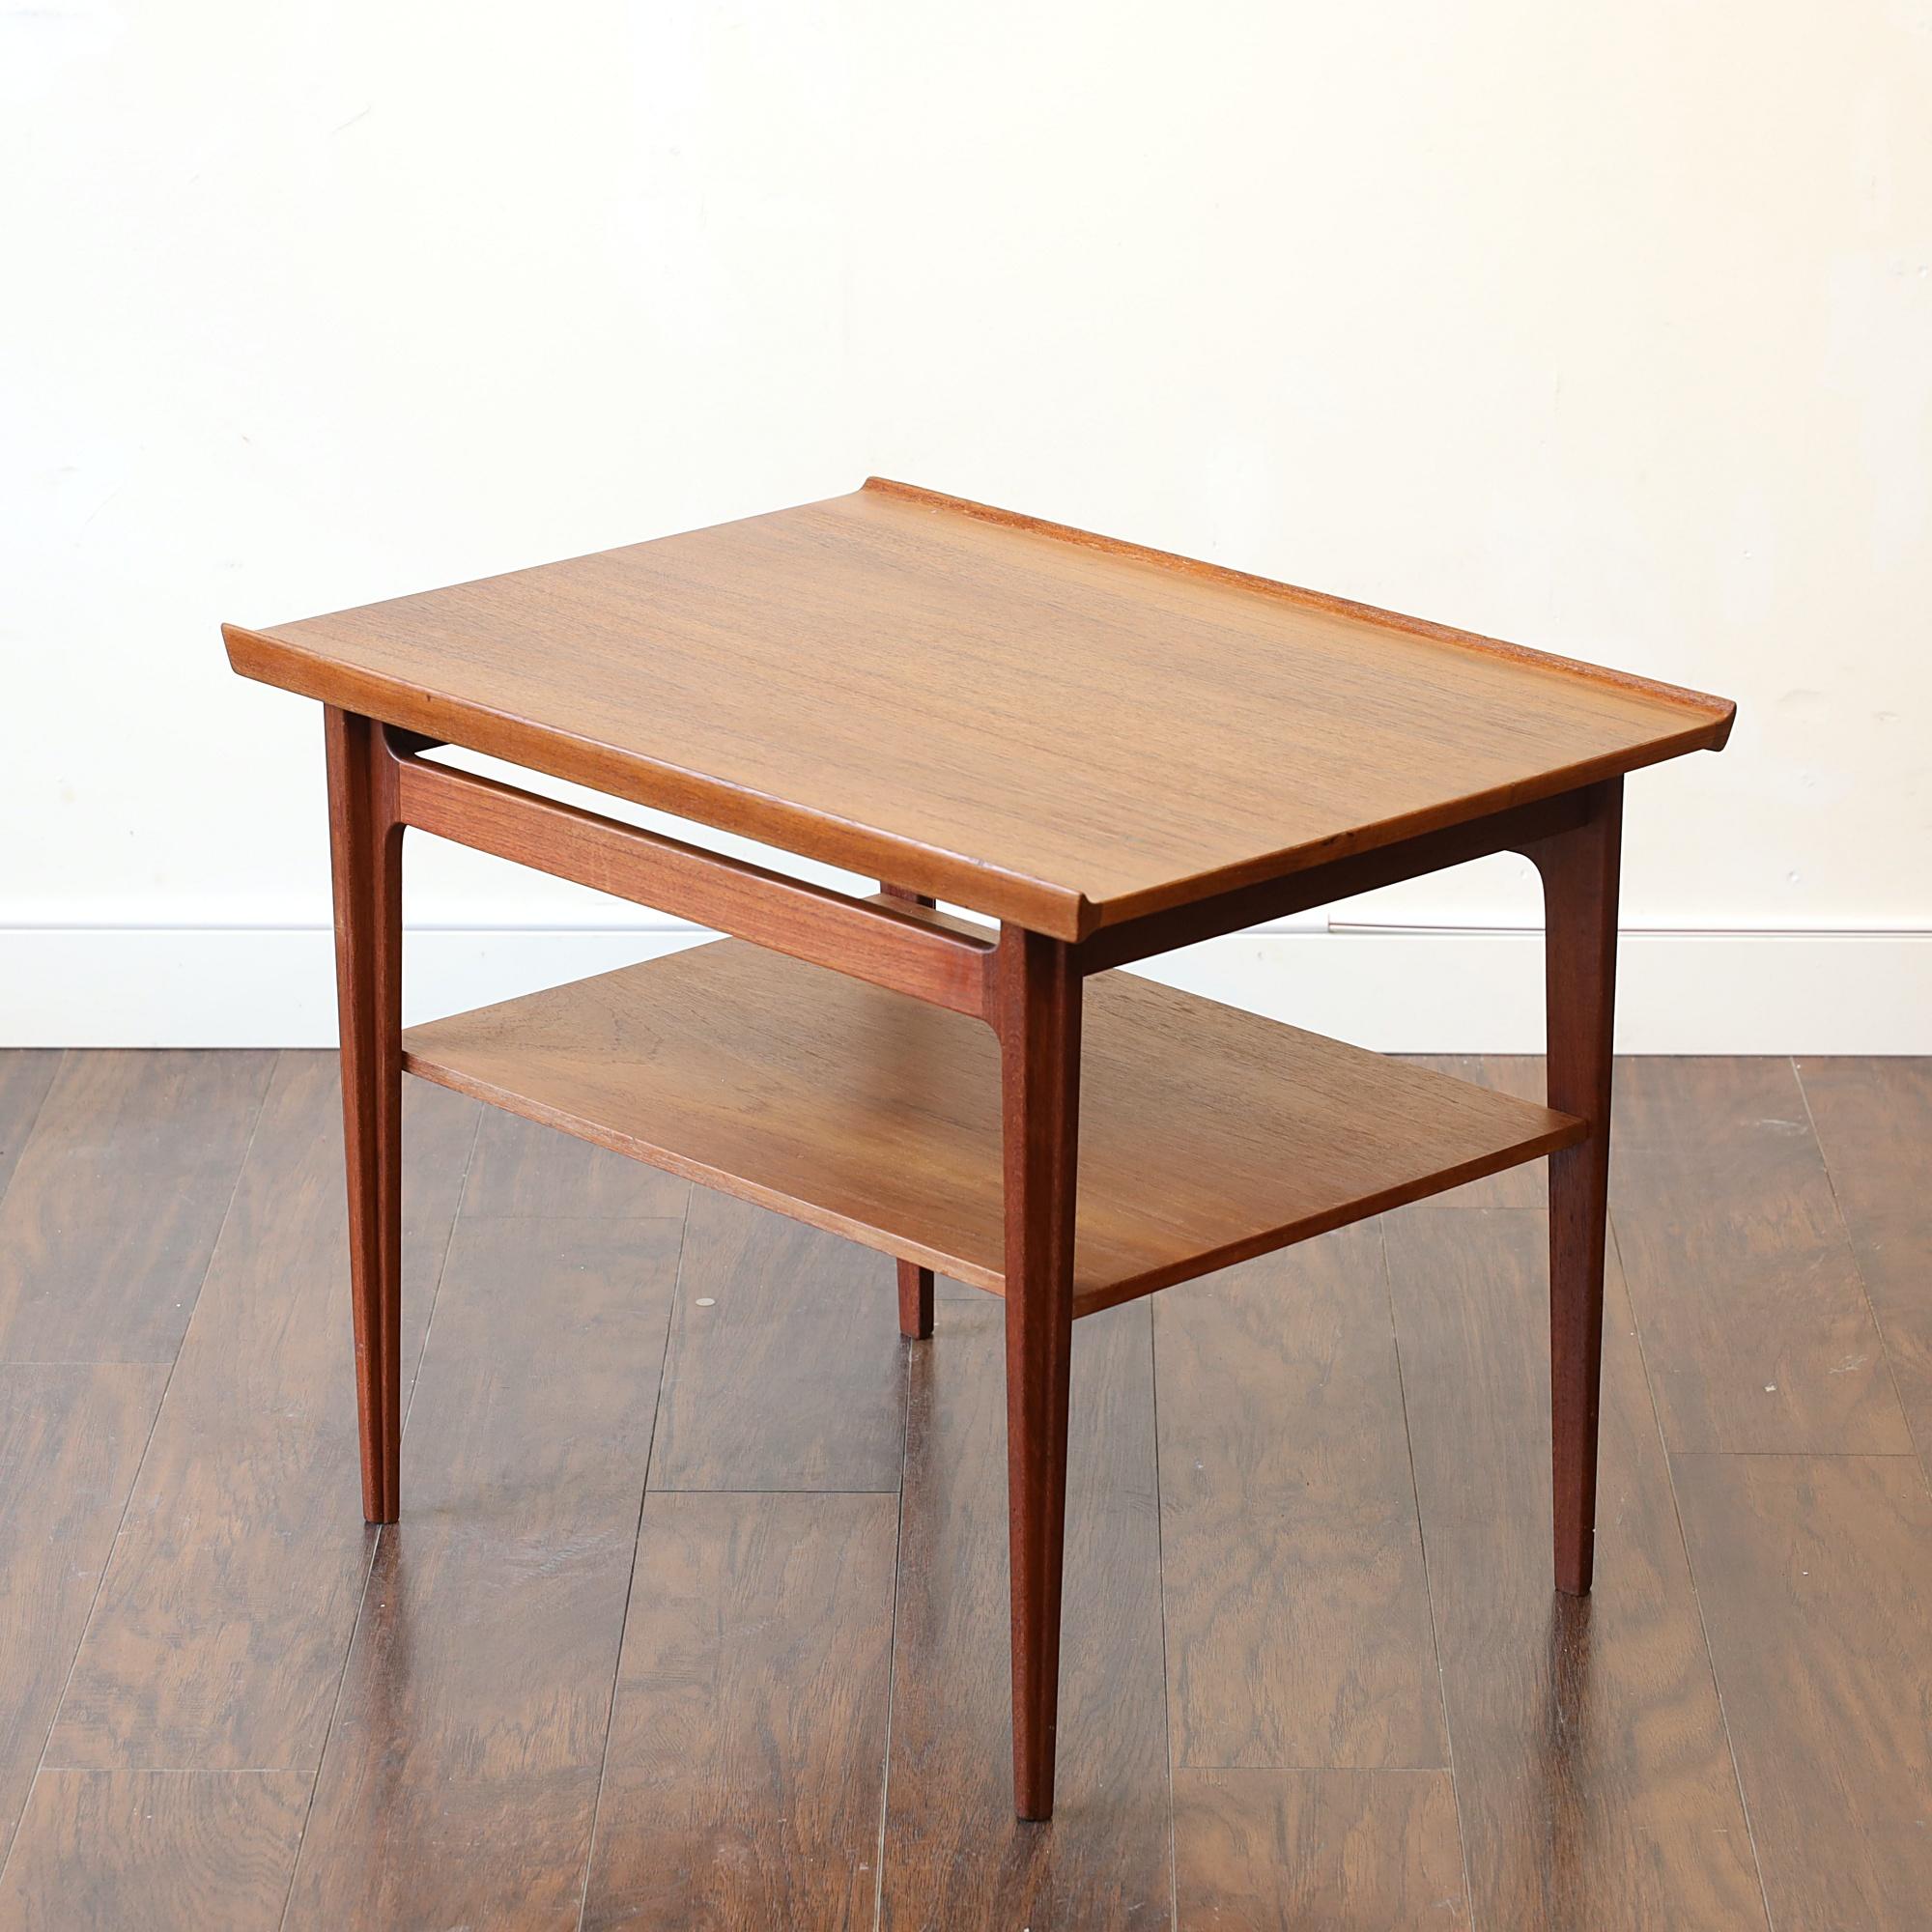 Danish modern teak FD533 side table by Finn Juhl for France & Son.
Dimensions: 28